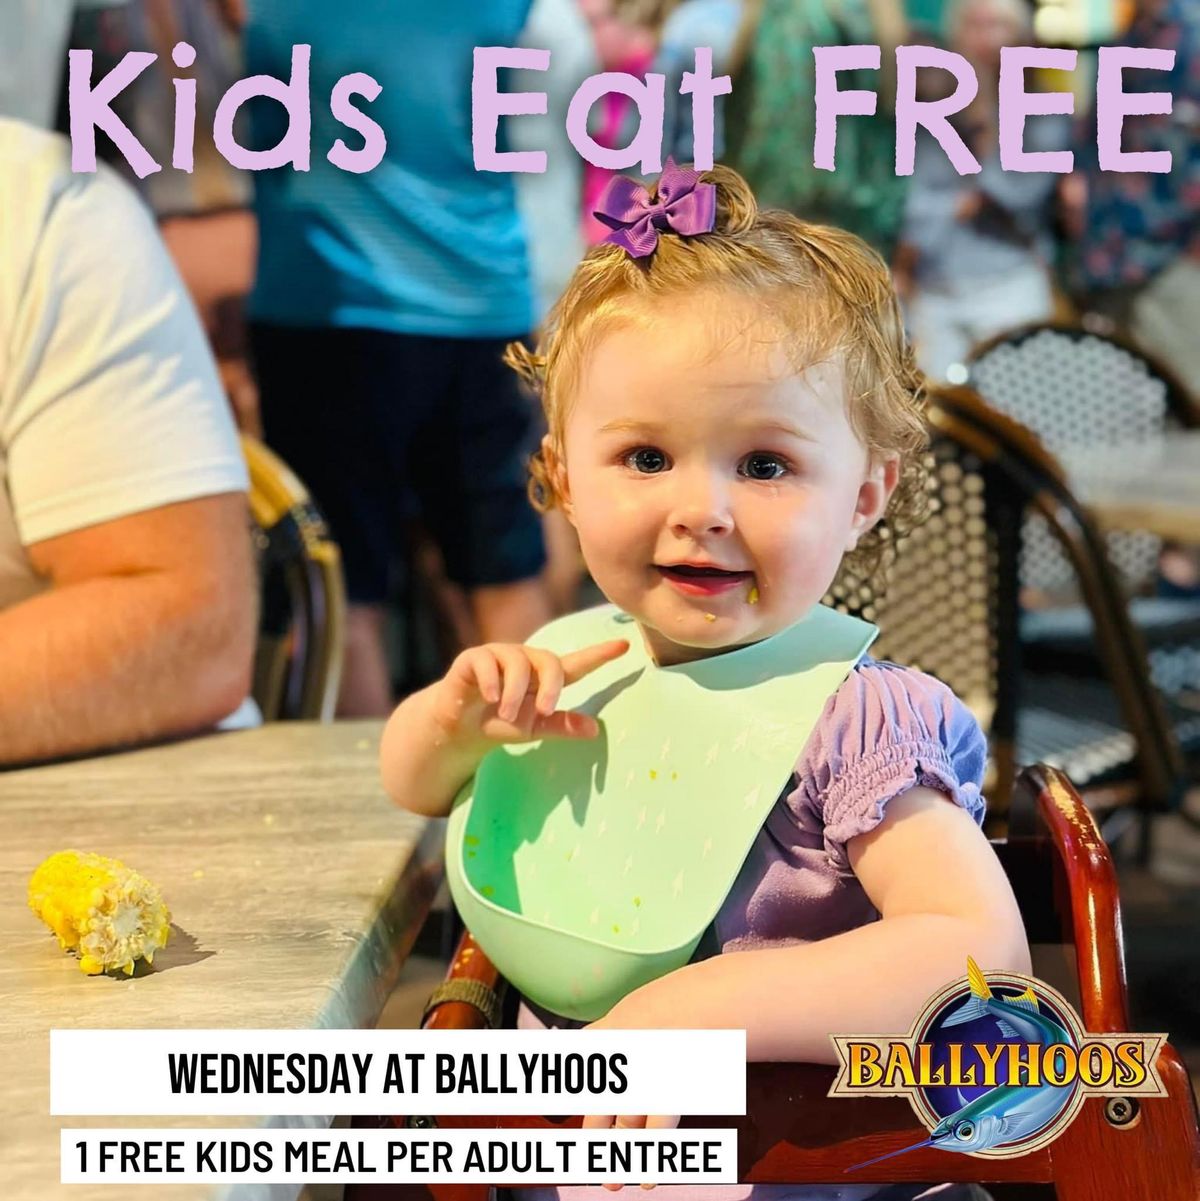 Kids Eat FREE at Ballyhoos Wednesday! \ud83d\udc68\u200d\ud83d\udc69\u200d\ud83d\udc66\u200d\ud83d\udc66